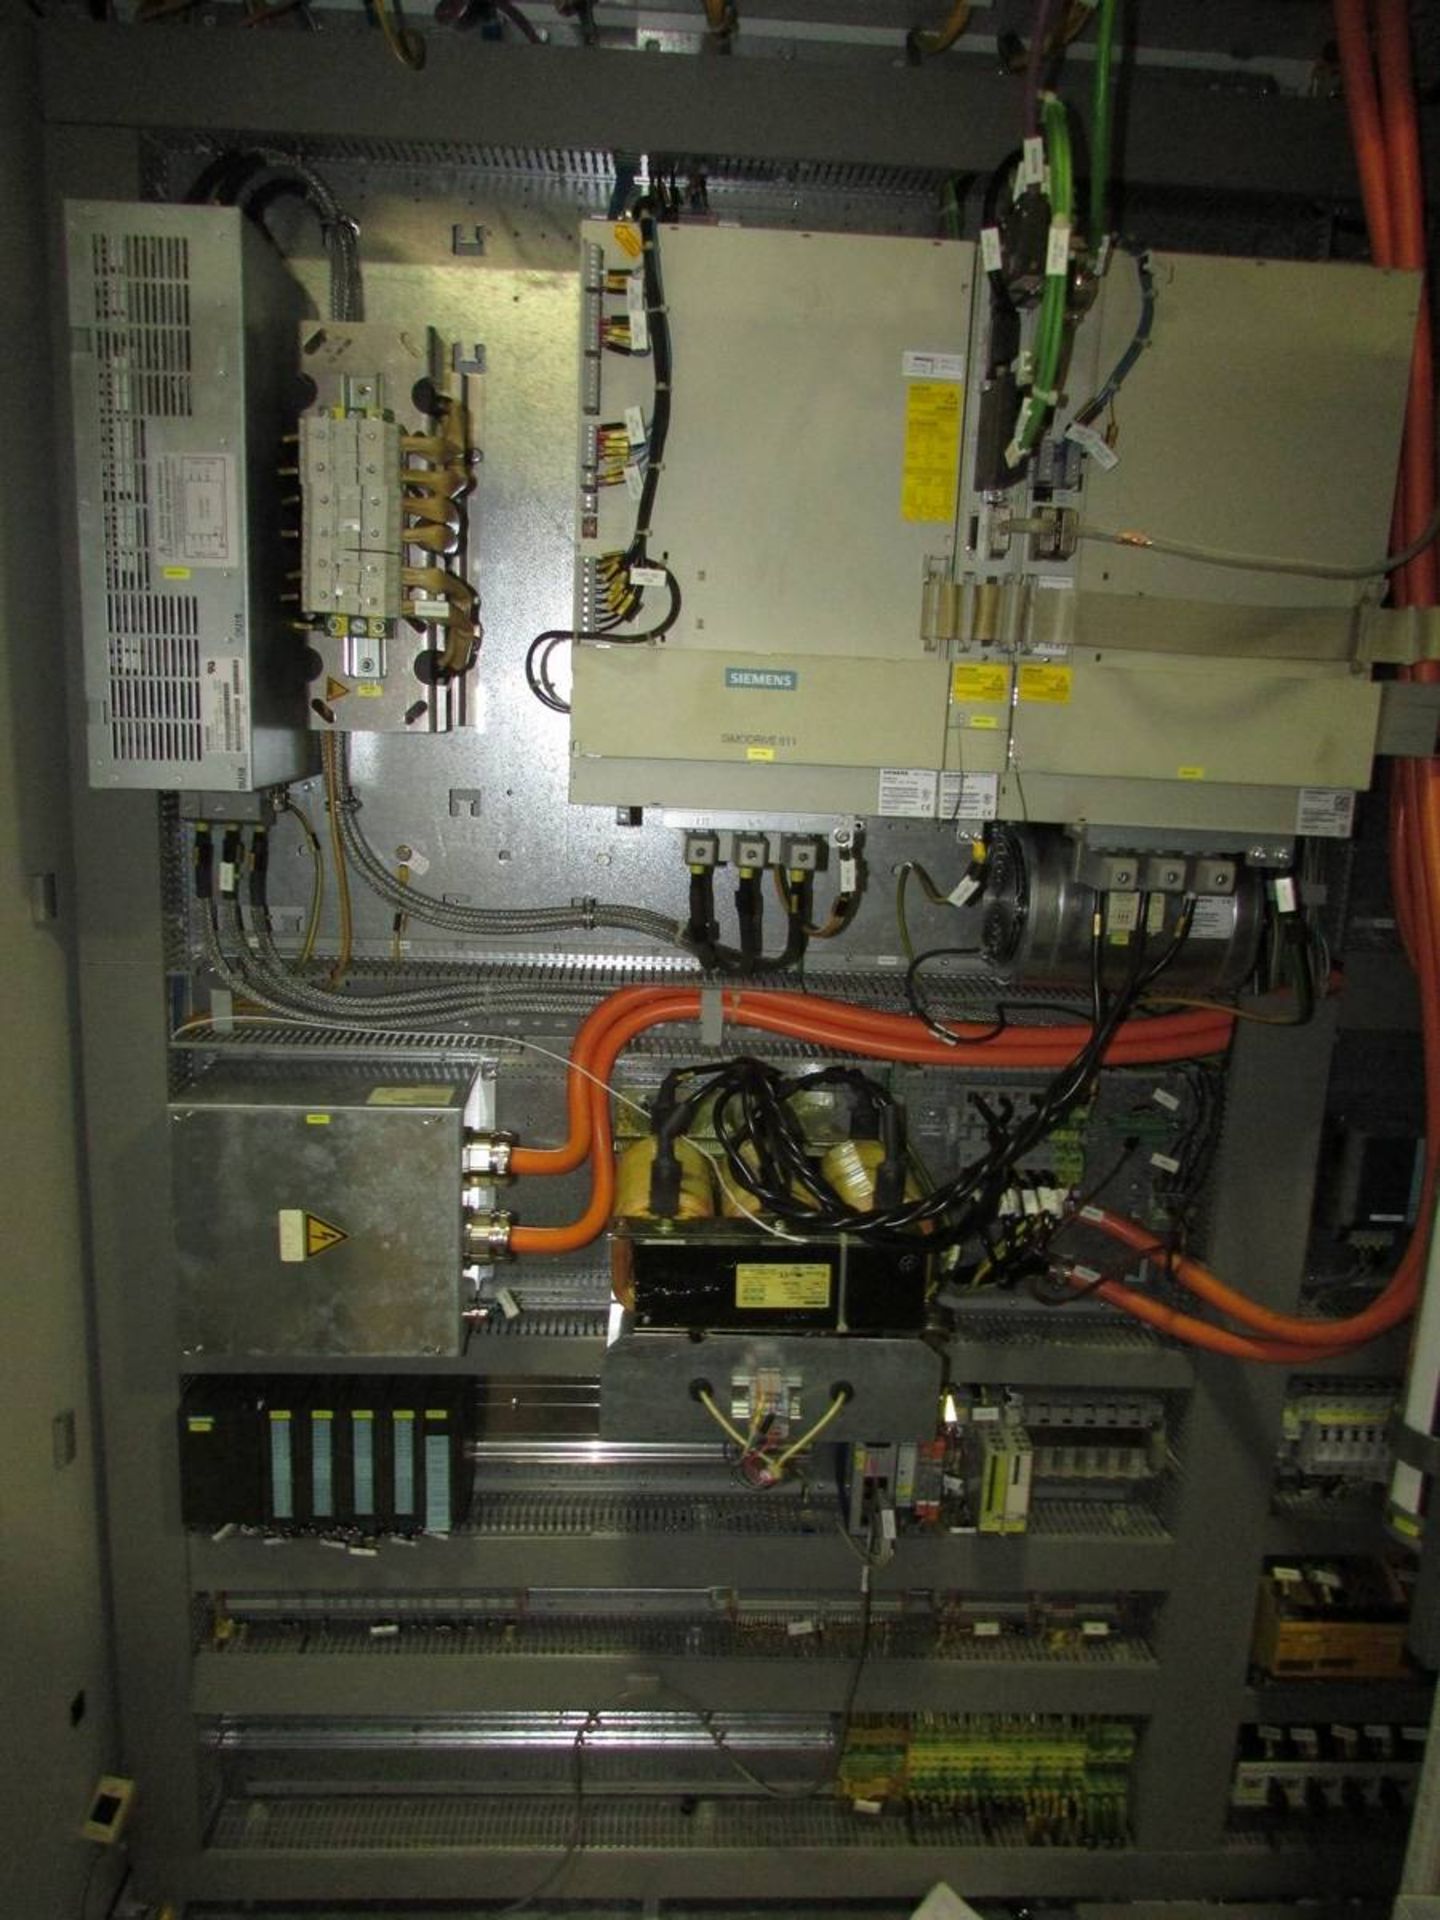 2006 Kapp CX 250 CNC Gear Honing Machine - Image 16 of 18